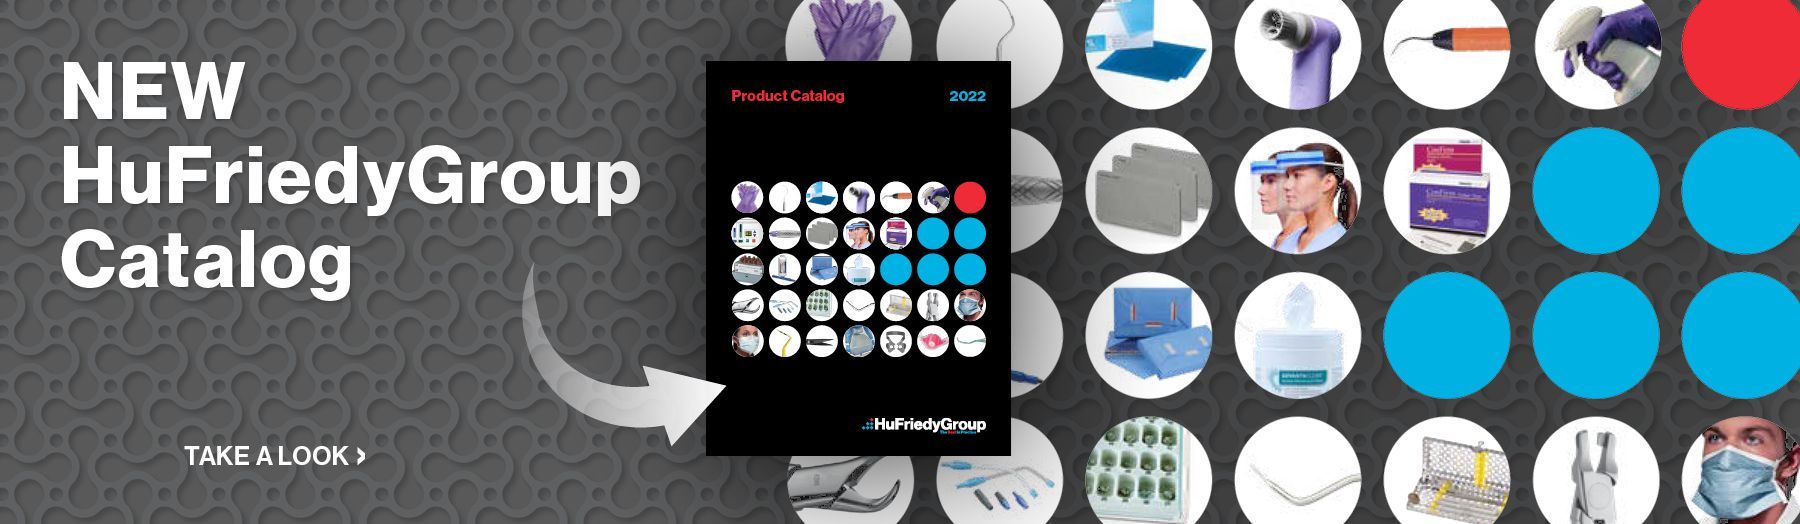 HuFriedyGroup 2022 Catalog